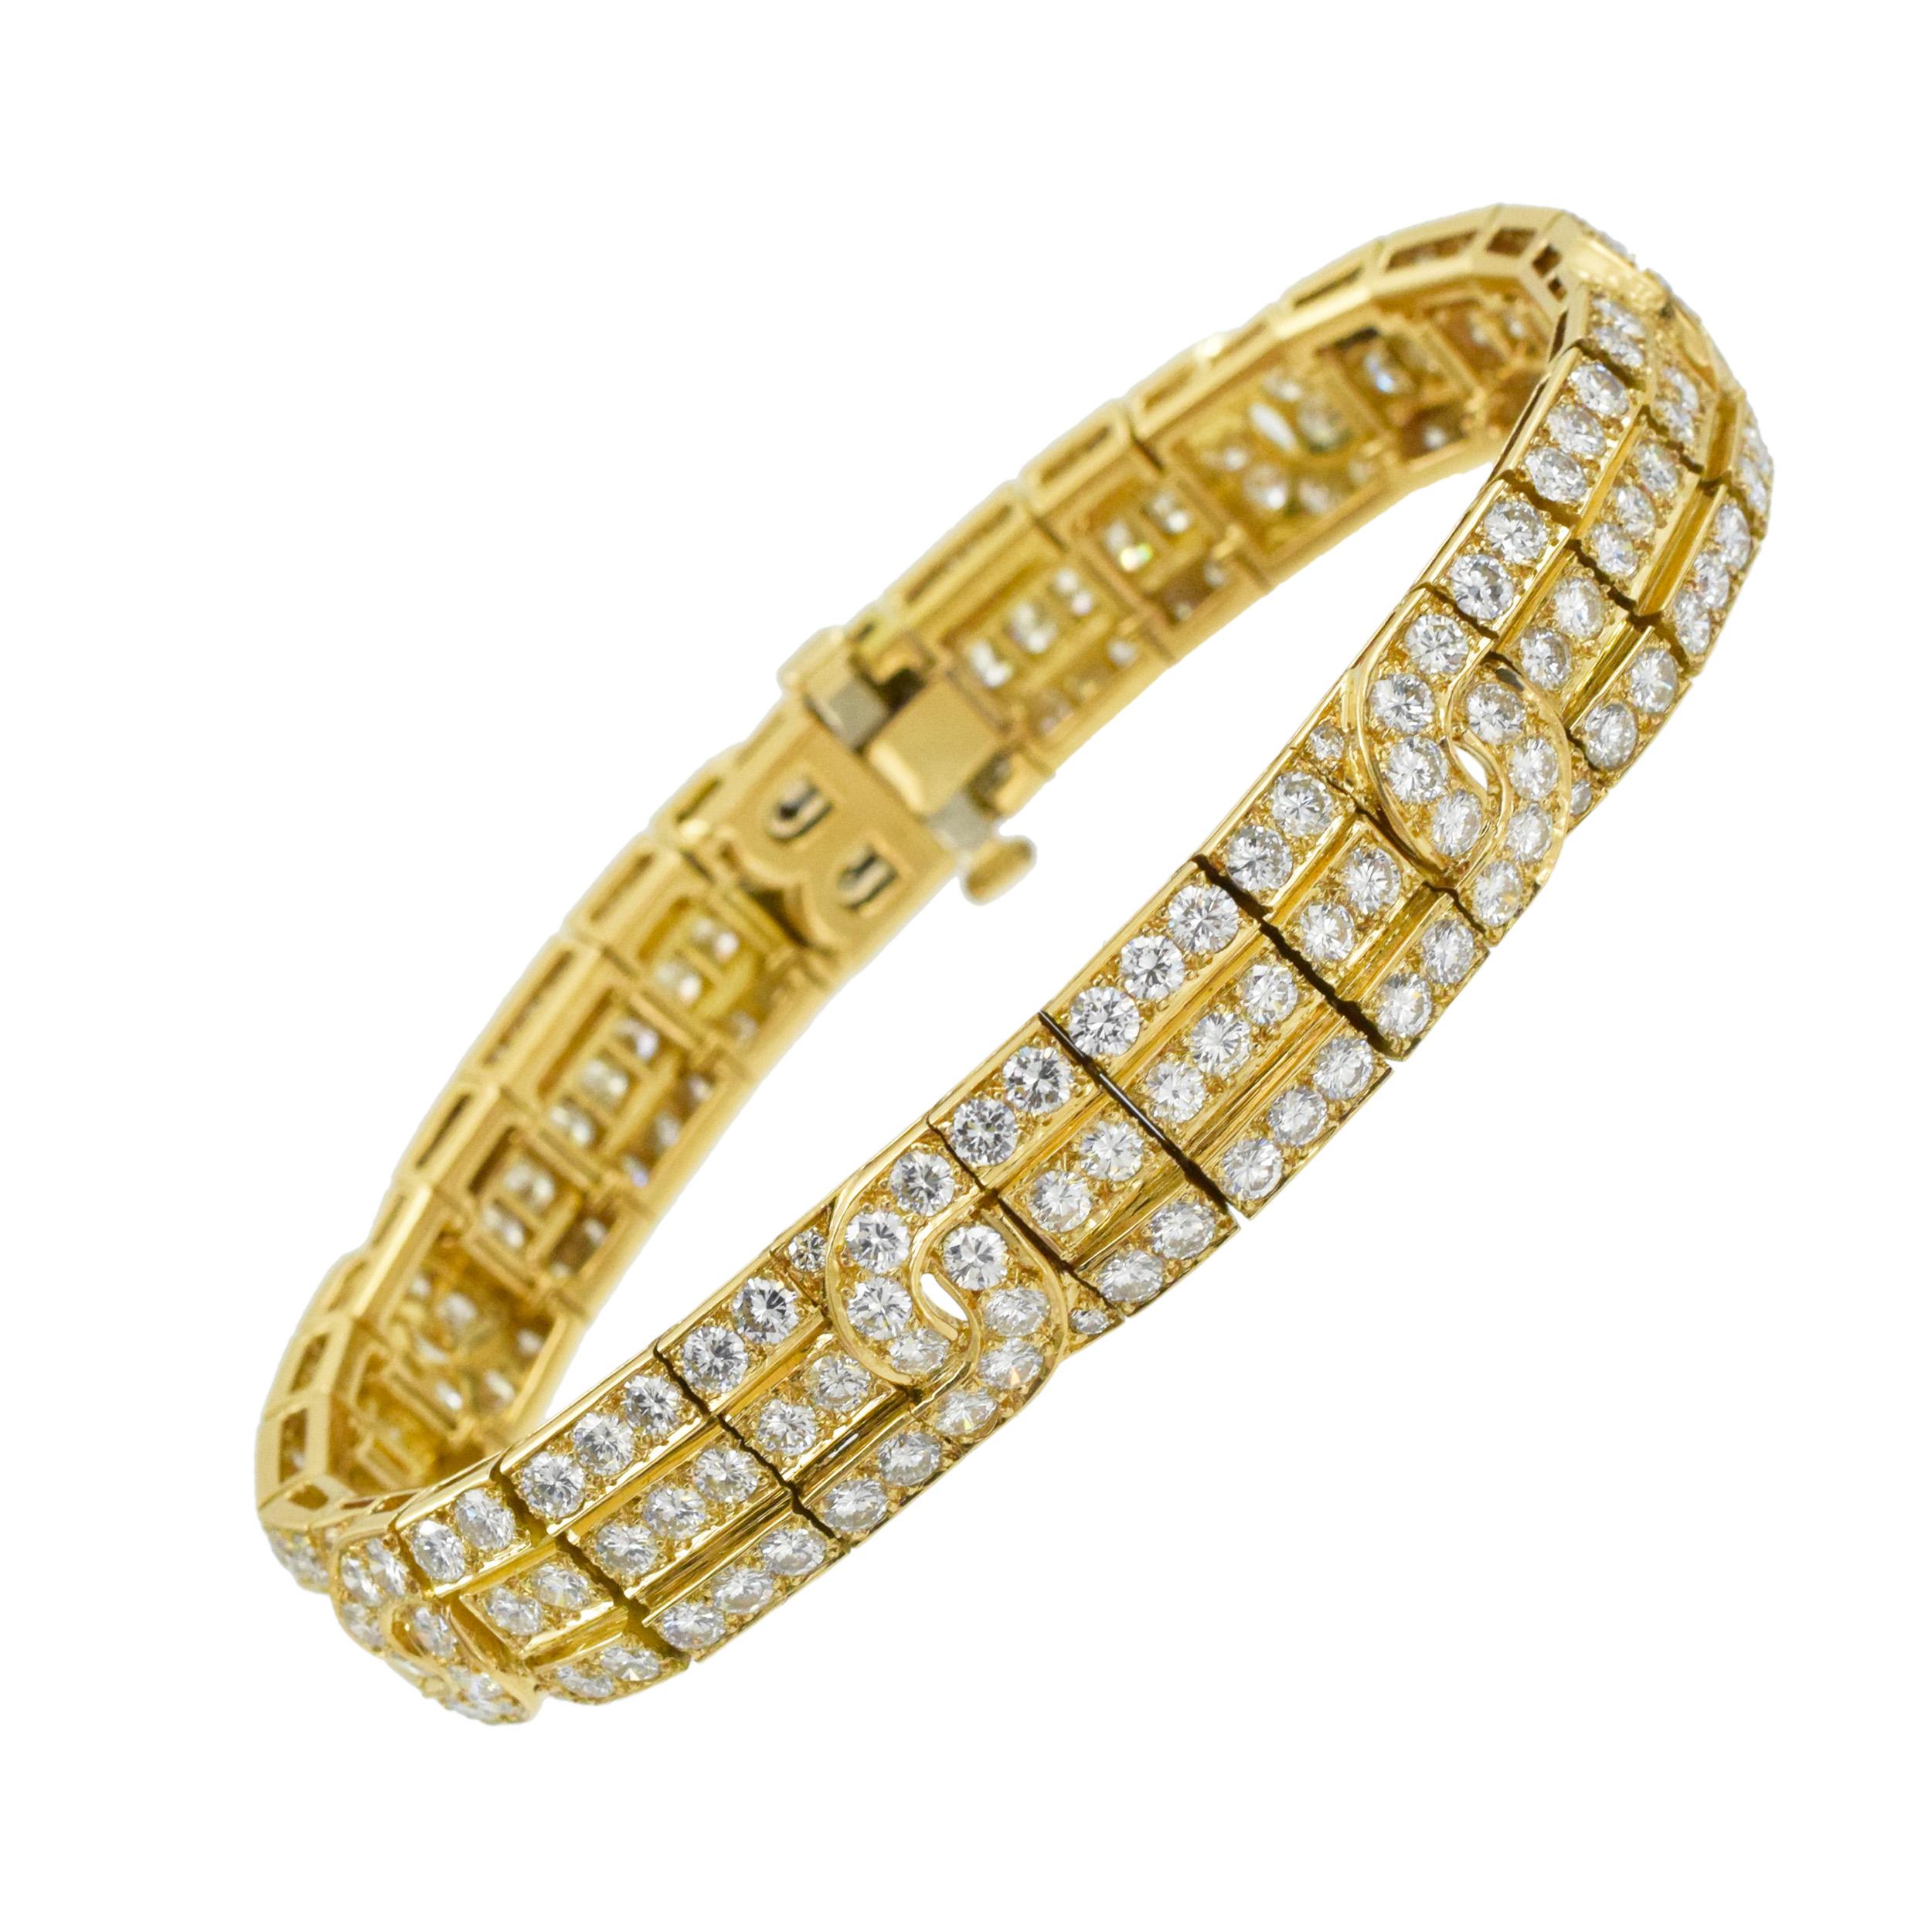 Contemporary Van Cleef & Arpels Diamond and Gold Bracelet